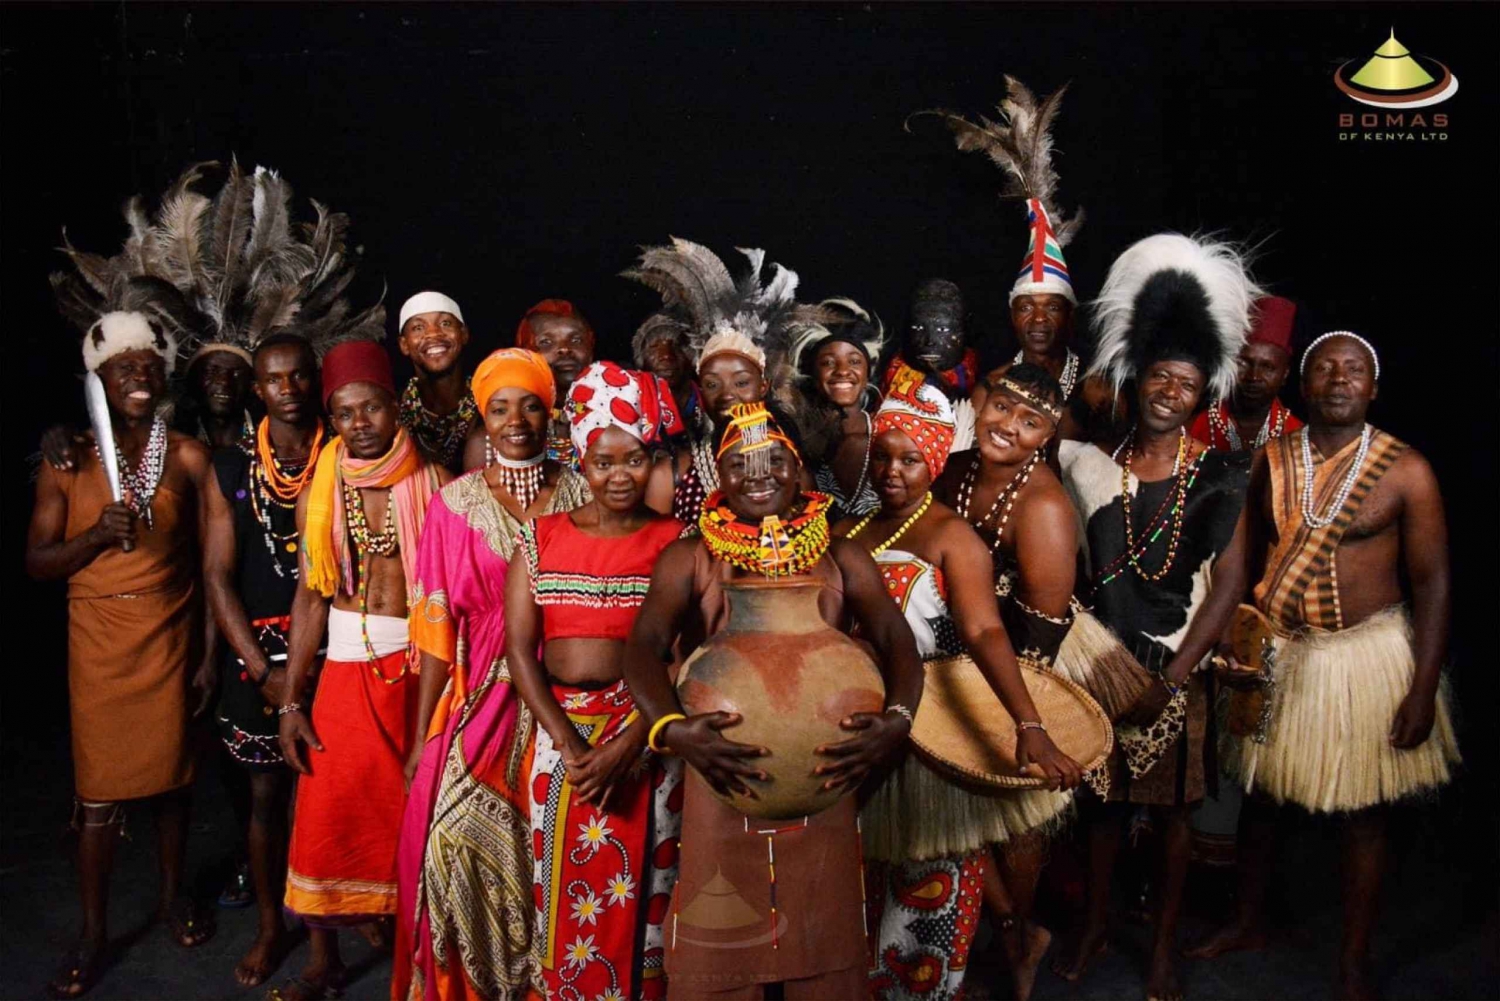 Bomas Of Kenya Cultural Experience